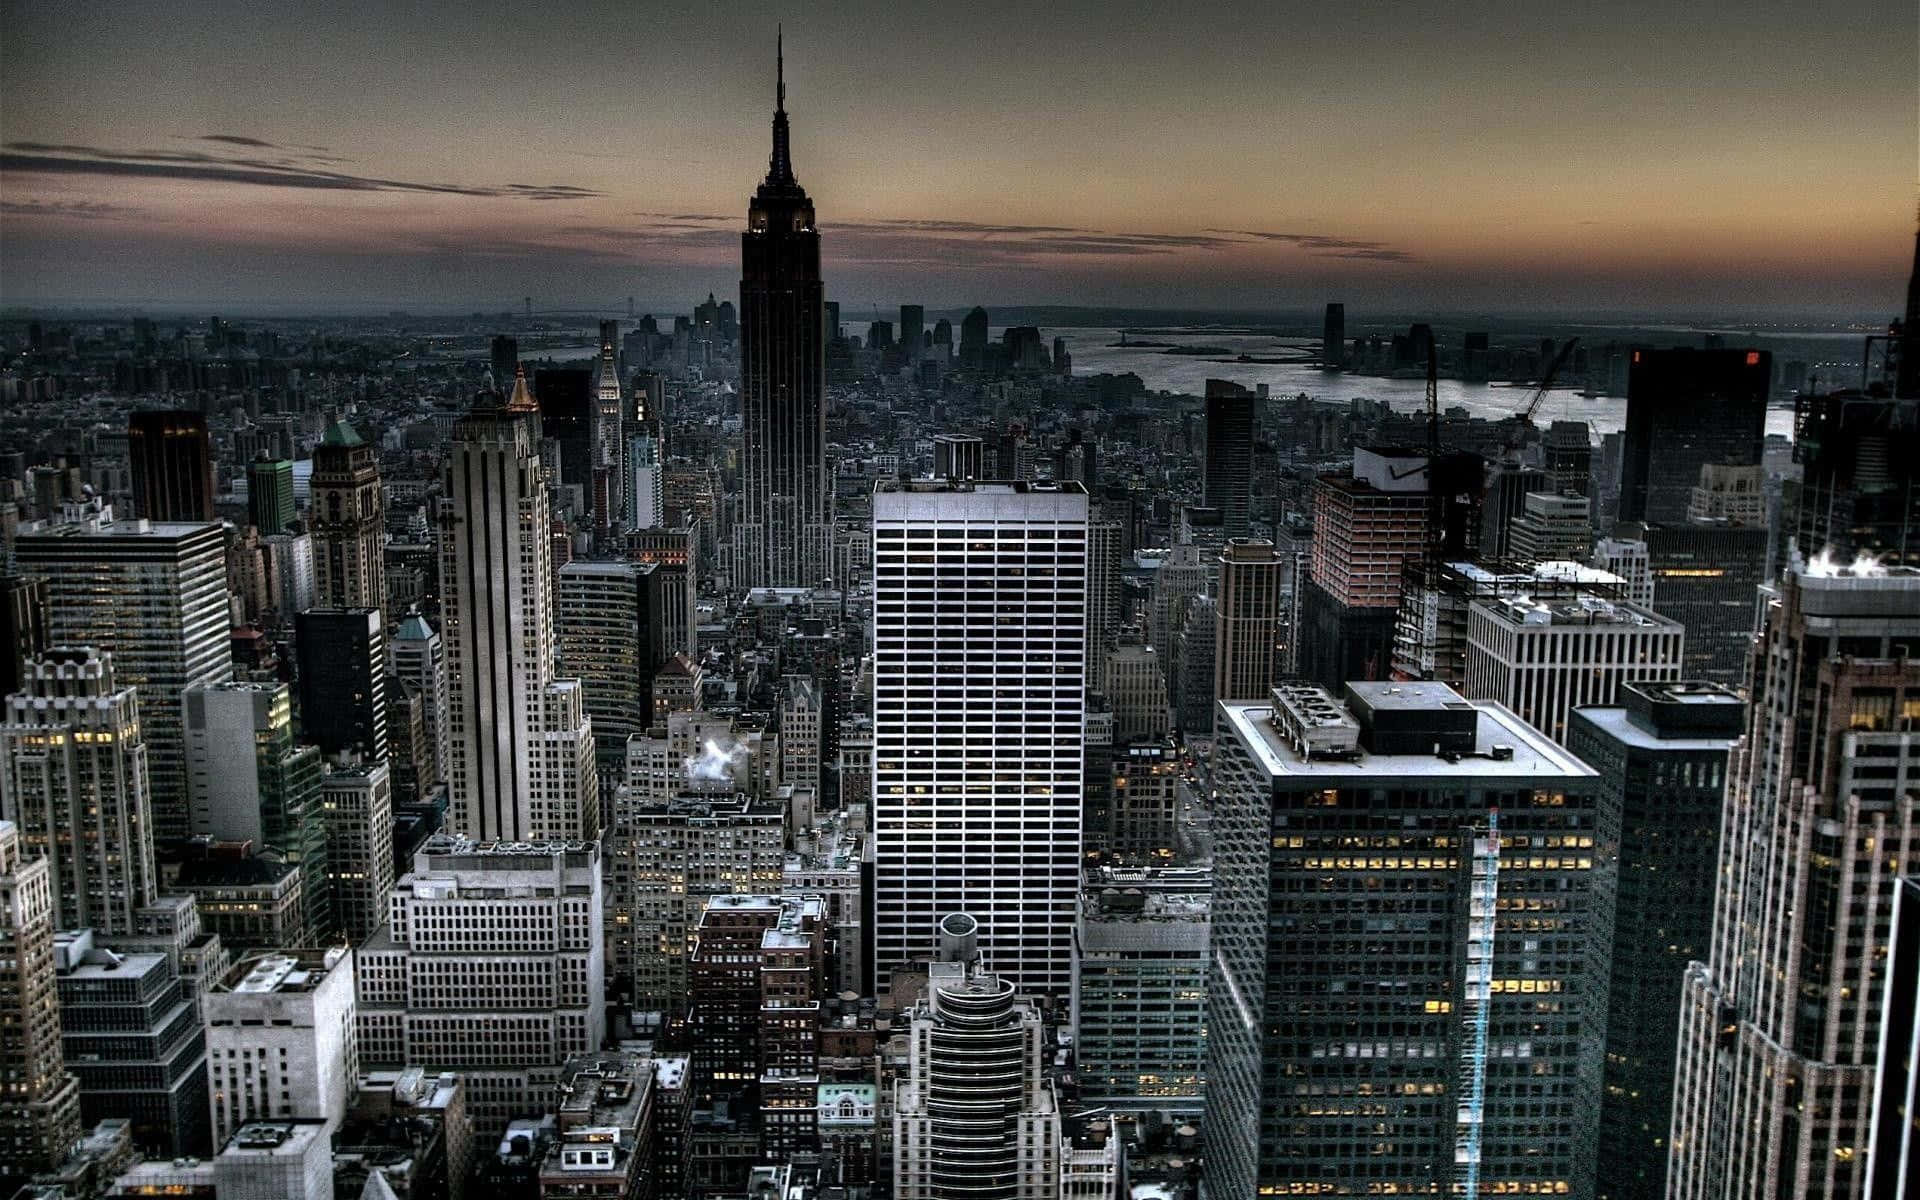 The Illuminated Skyline of New York City